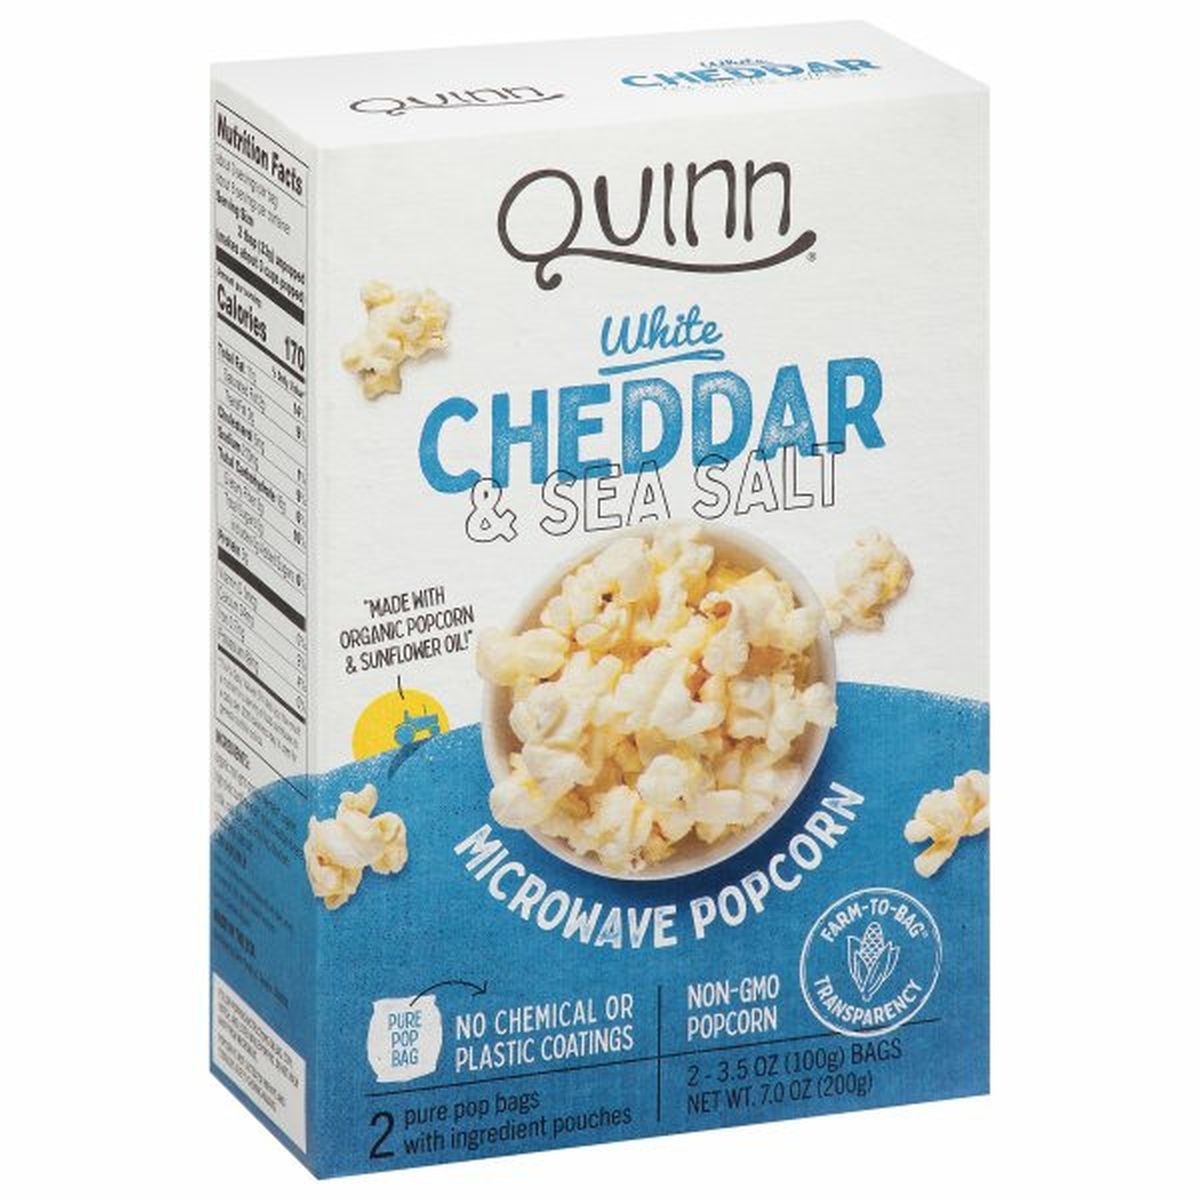 Calories in Quinn Microwave Popcorn, White Cheddar & Sea Salt, 2 Pack